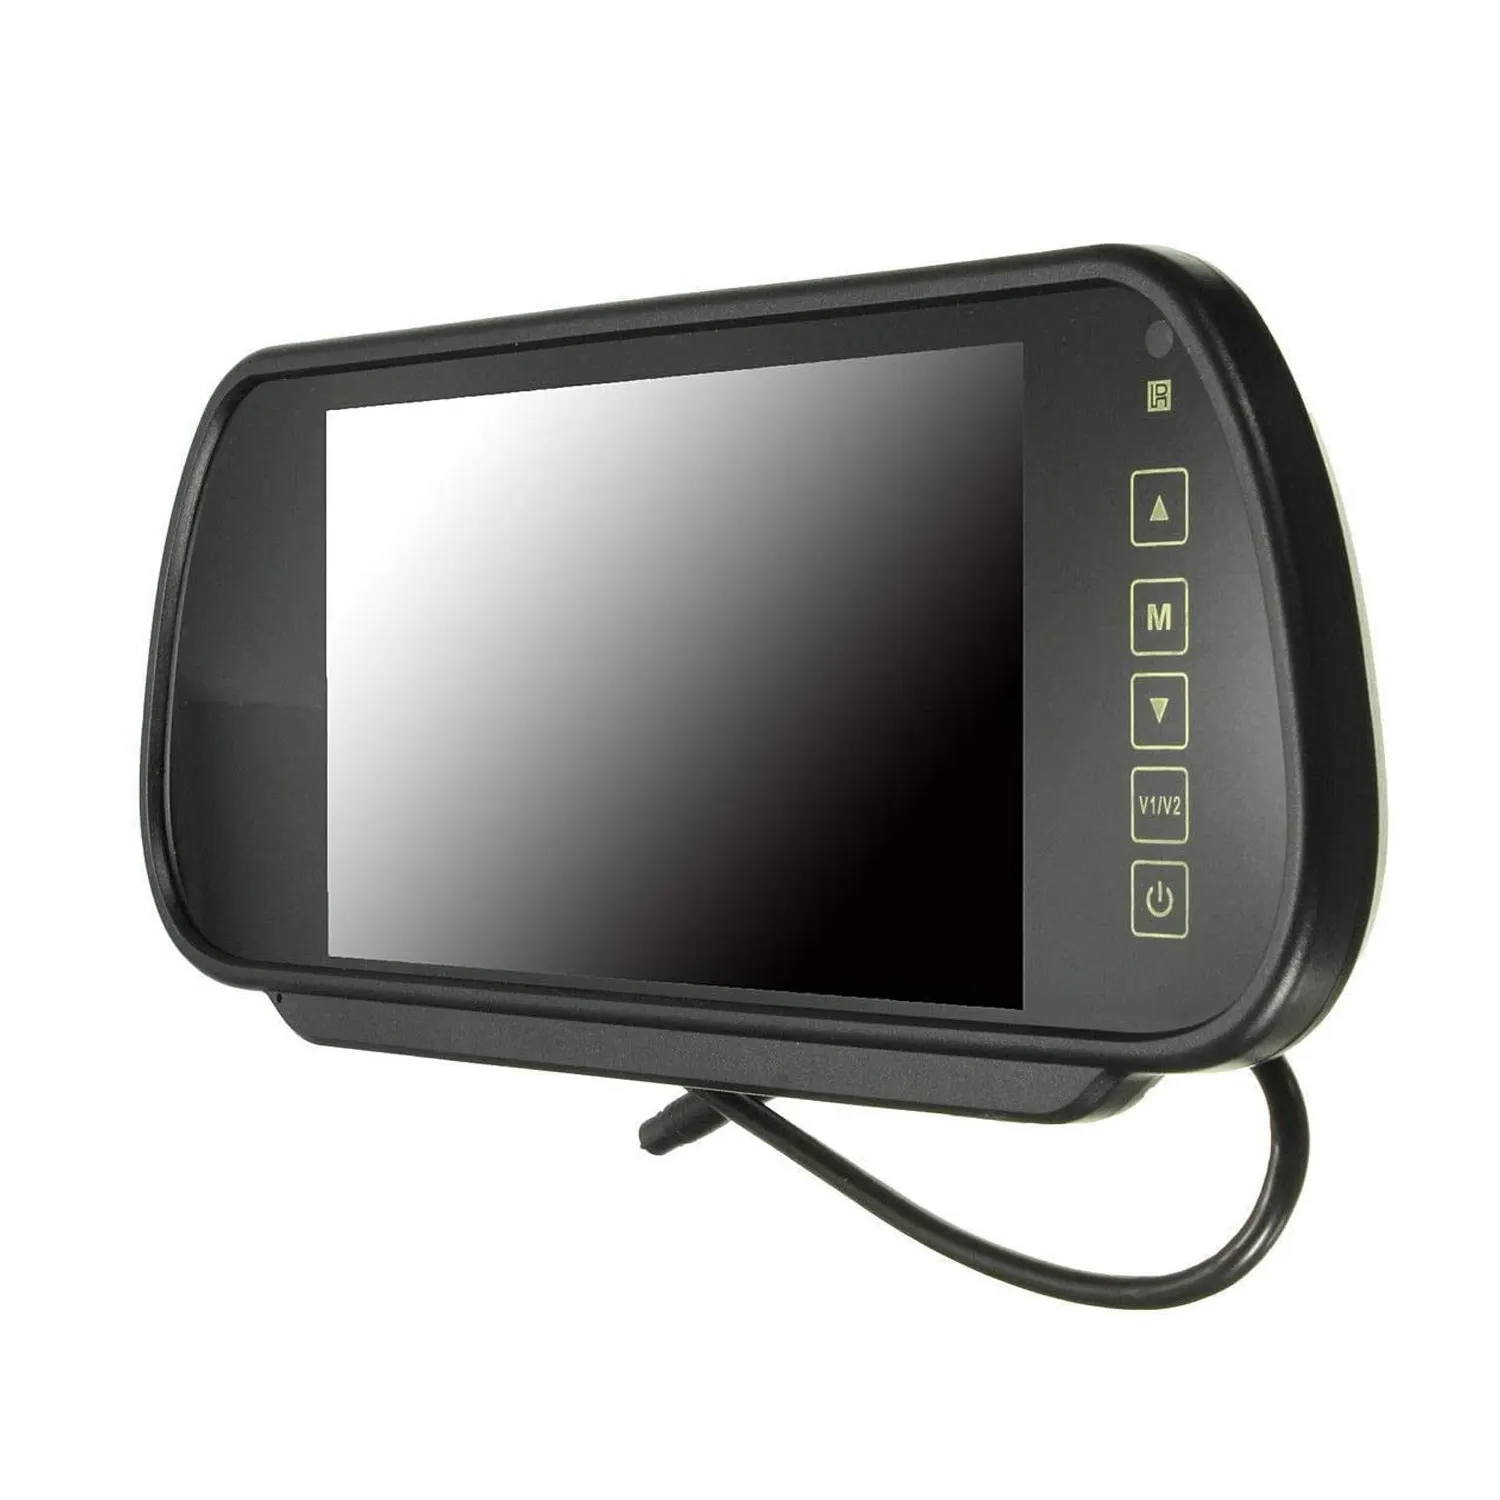 7 "TFT 색깔 LCD 스크린 2 영상 입력 차 뒷 전망 거울 감시자 차량 주차 DVD/VCR/차 반전 캠을 위한 거울 감시자